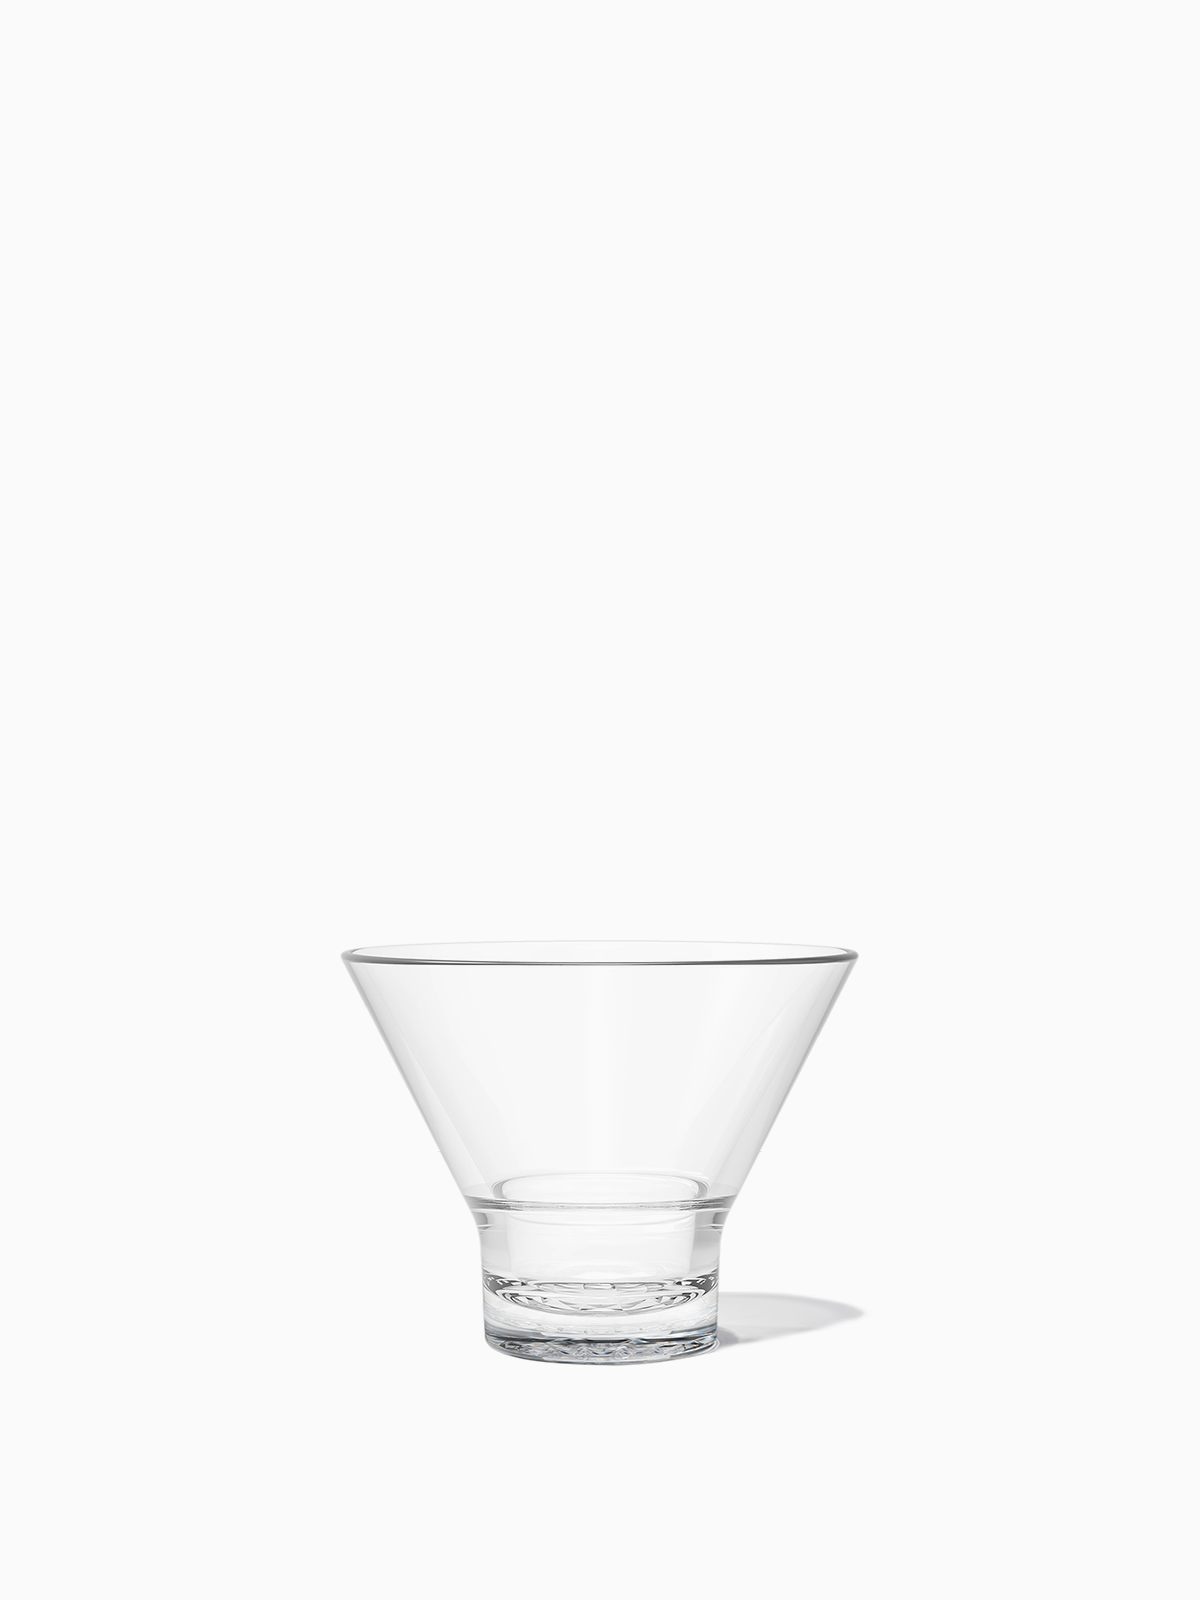 RESERVE 8oz Stemless Martini MS Copolyester Glass - Bulk-0